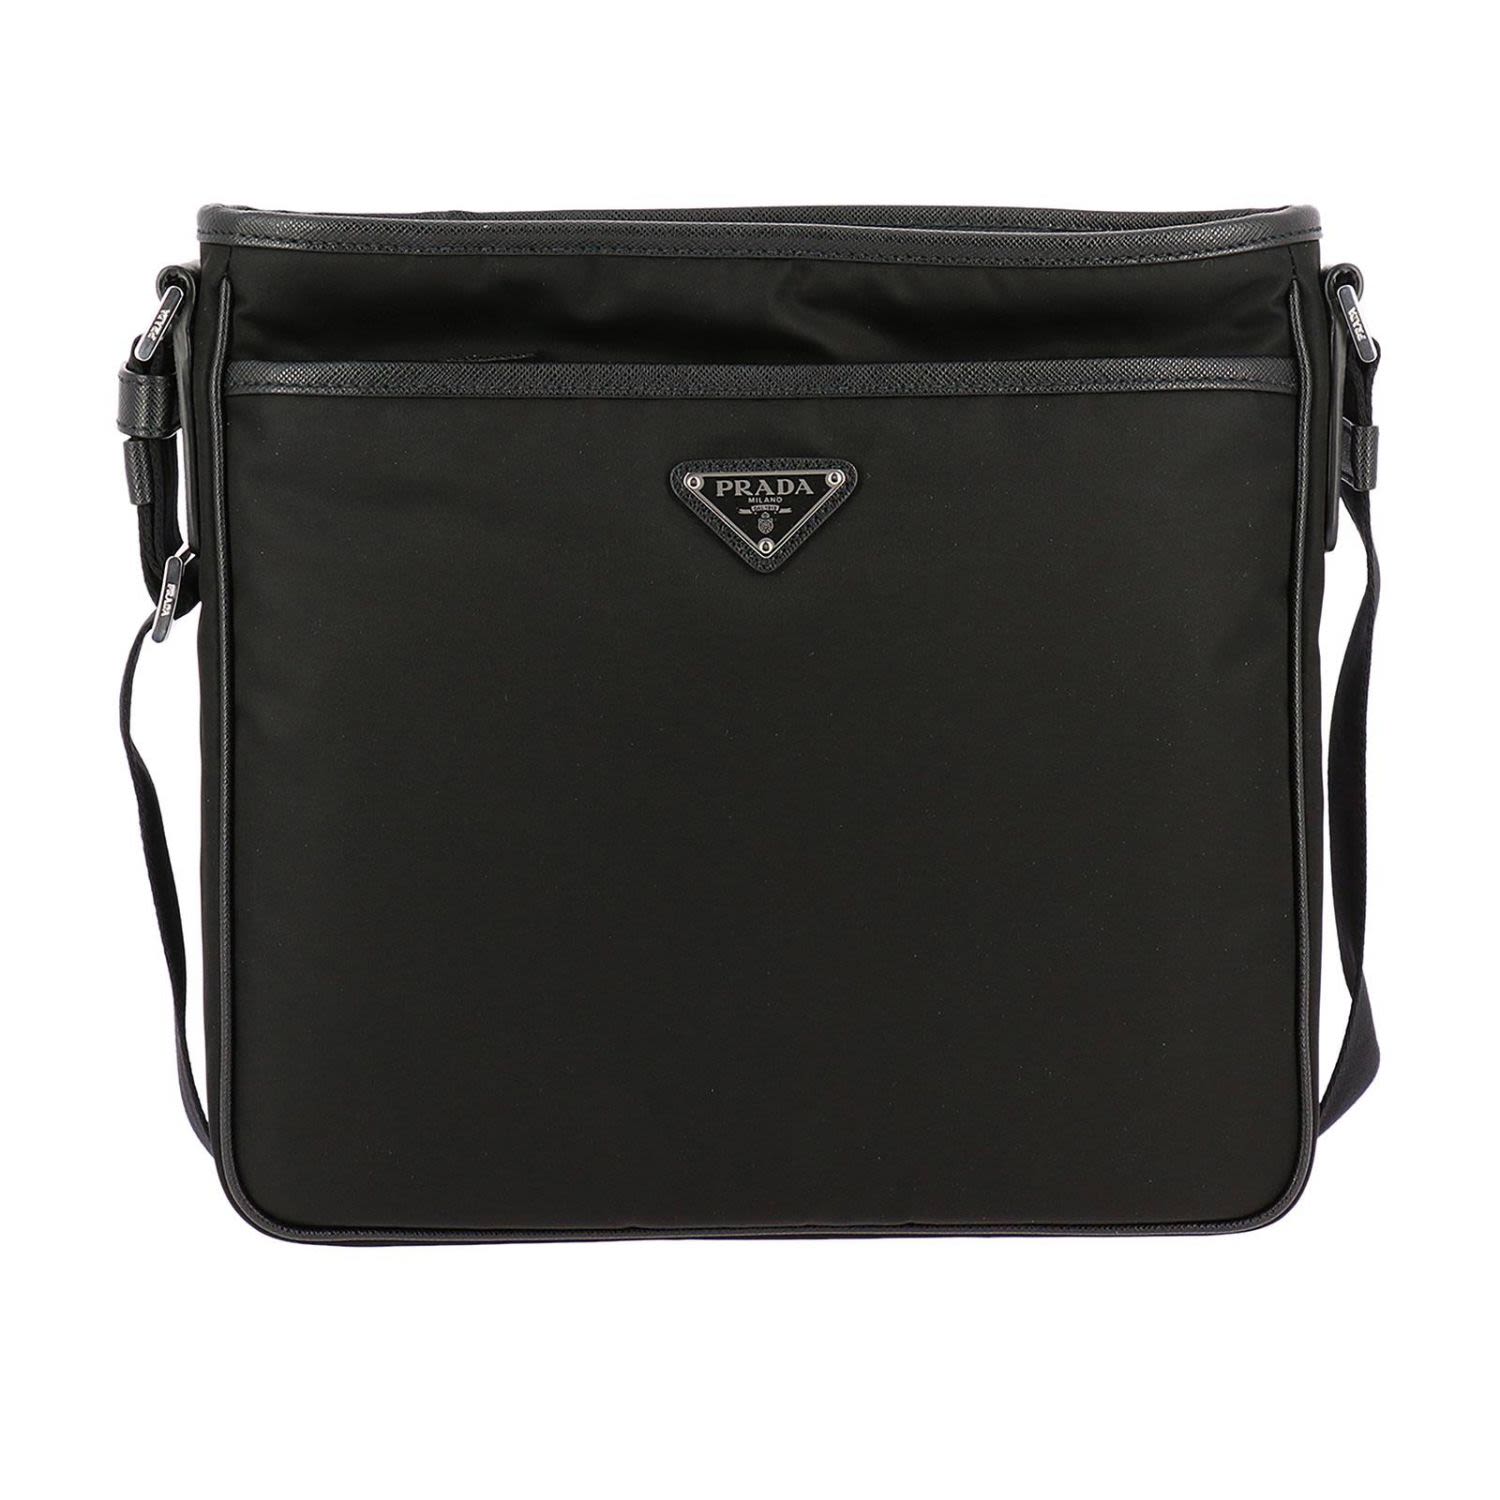 italist | Best price in the market for Prada Bags Bags Men Prada - black - 10494877 | italist